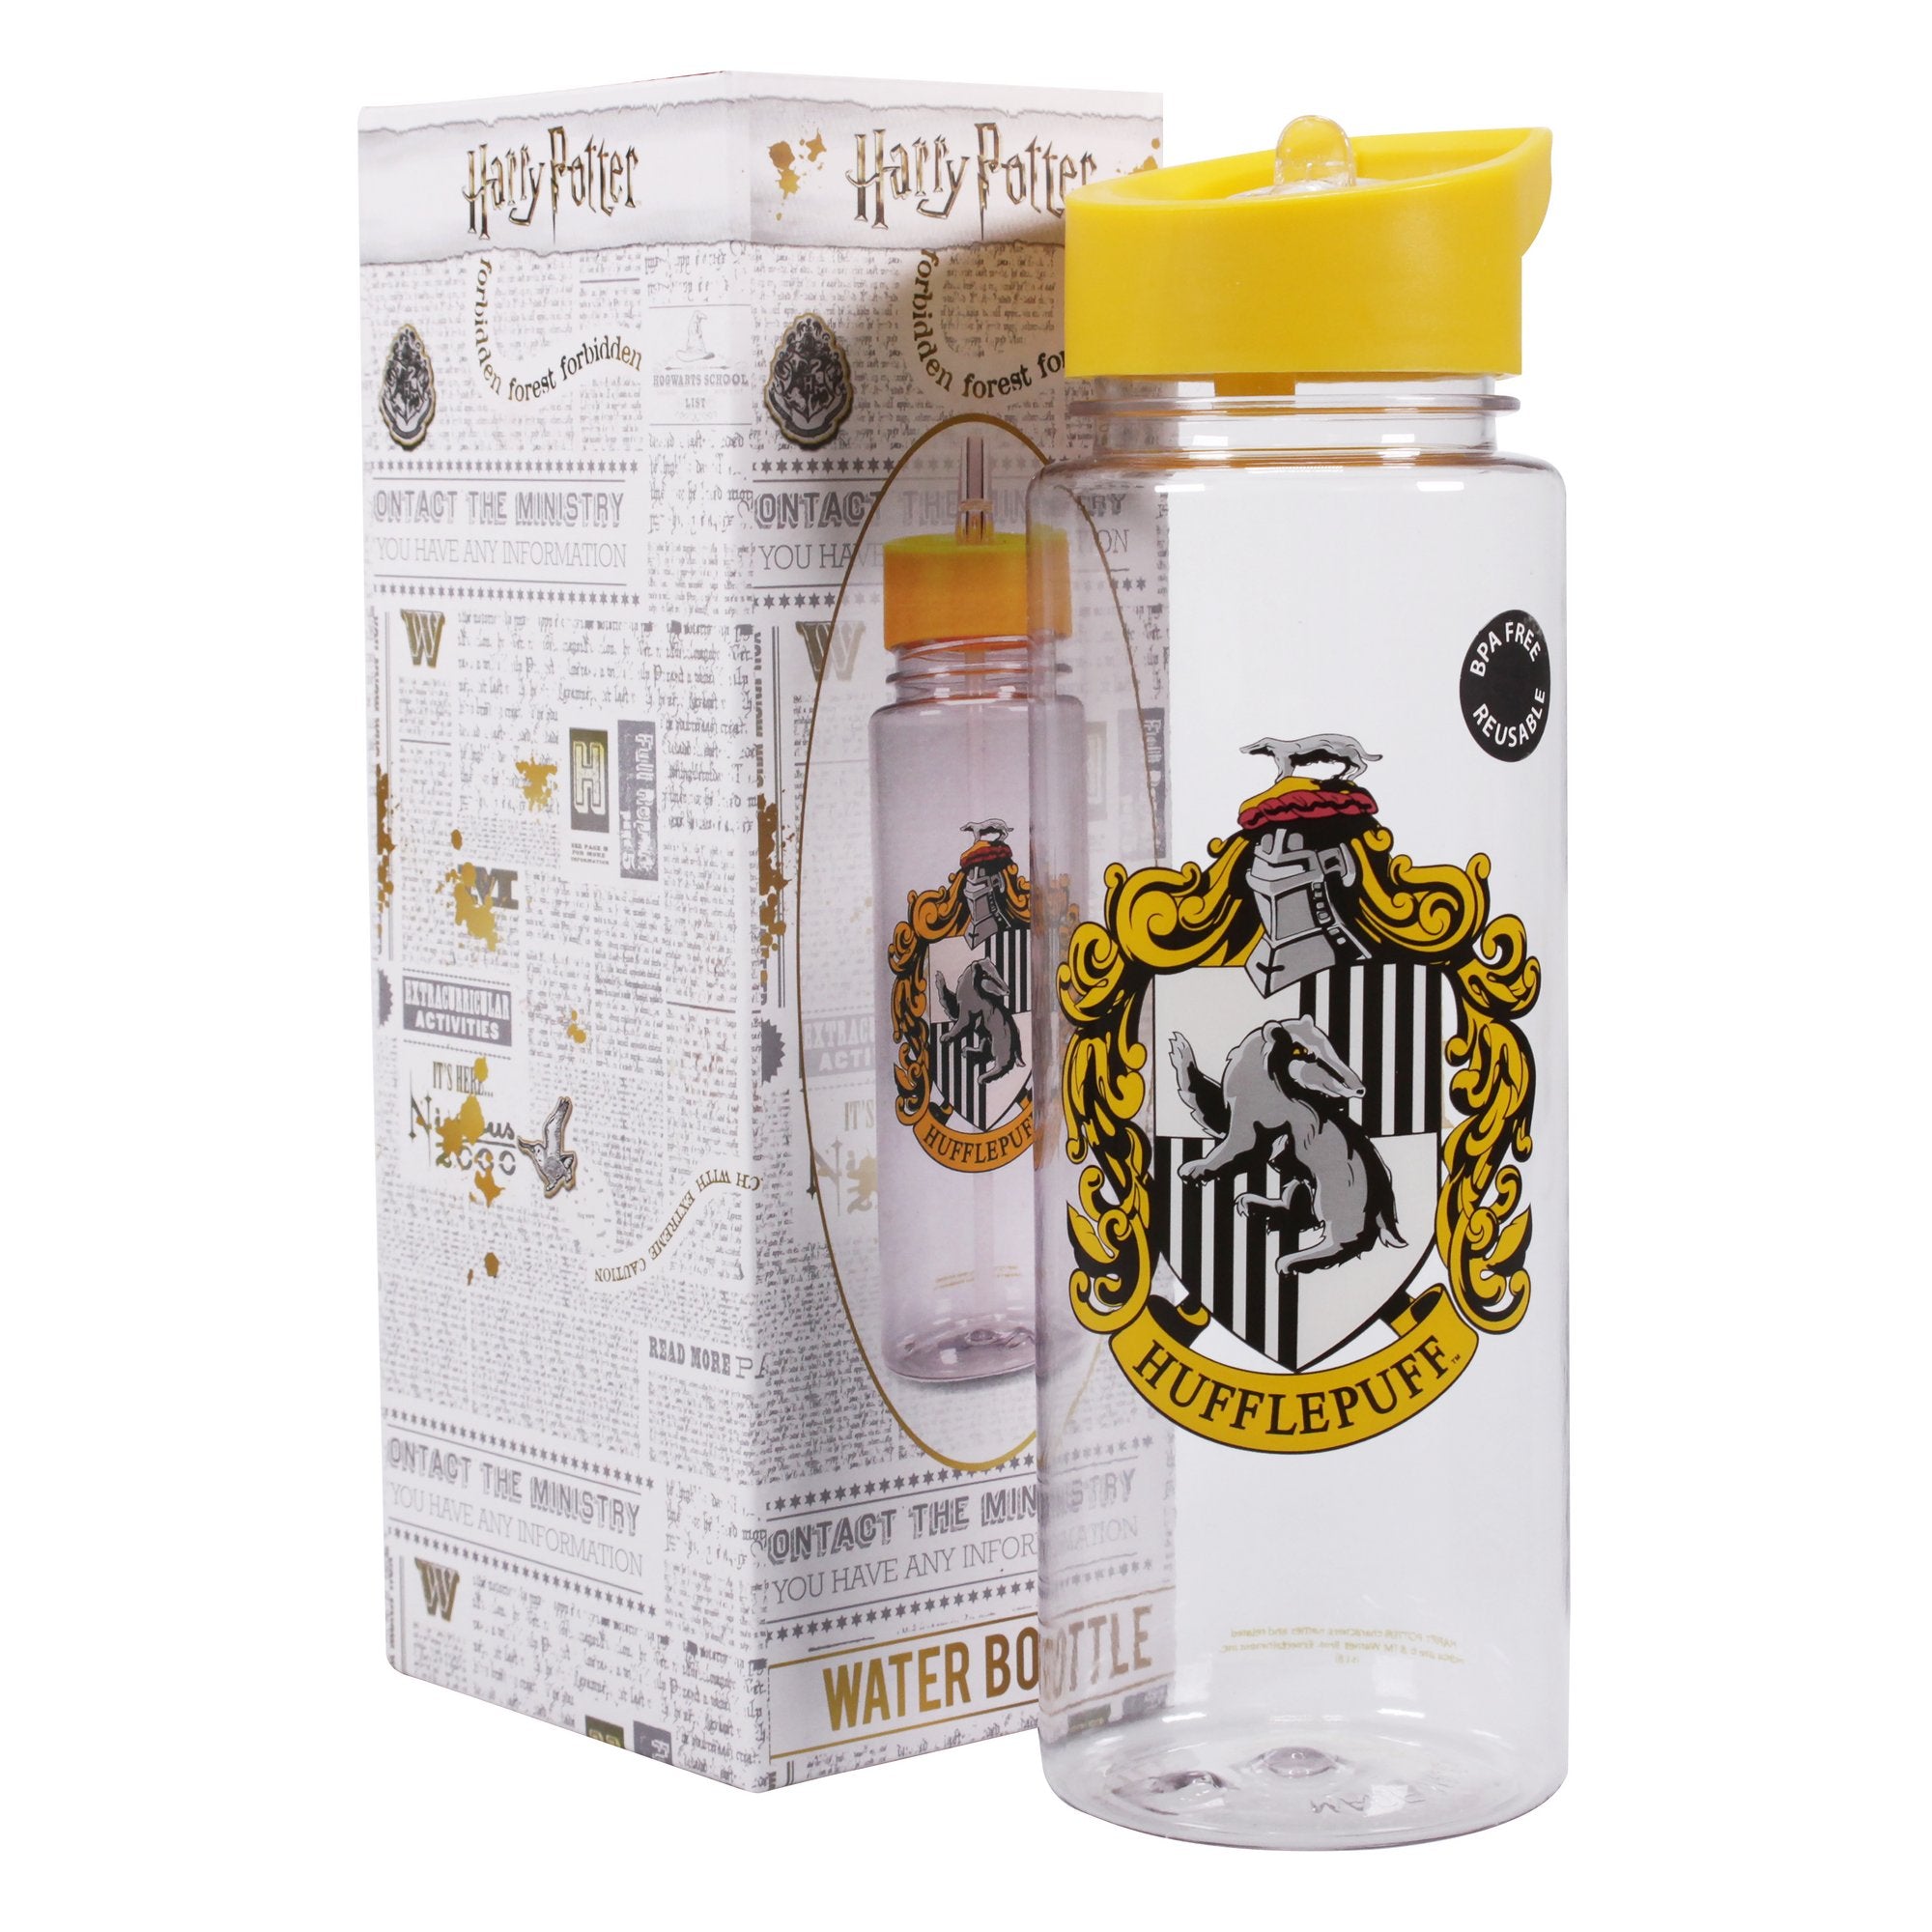 Harry Potter Water Bottle - Hufflepuff Crest